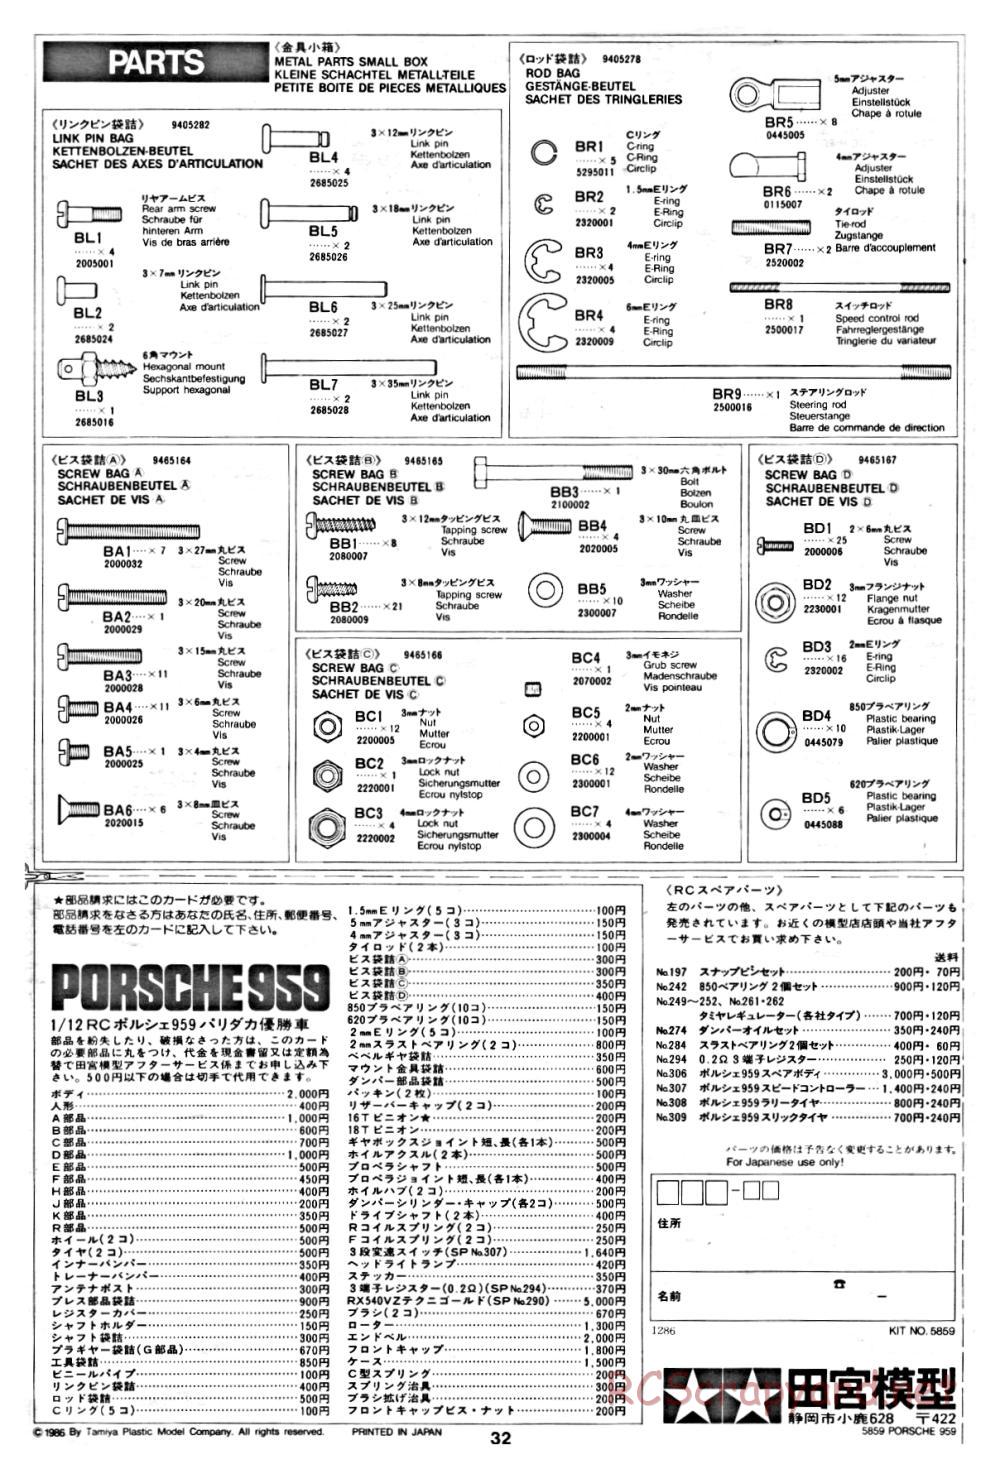 Tamiya - Porsche 959 - 58059 - Manual - Page 32